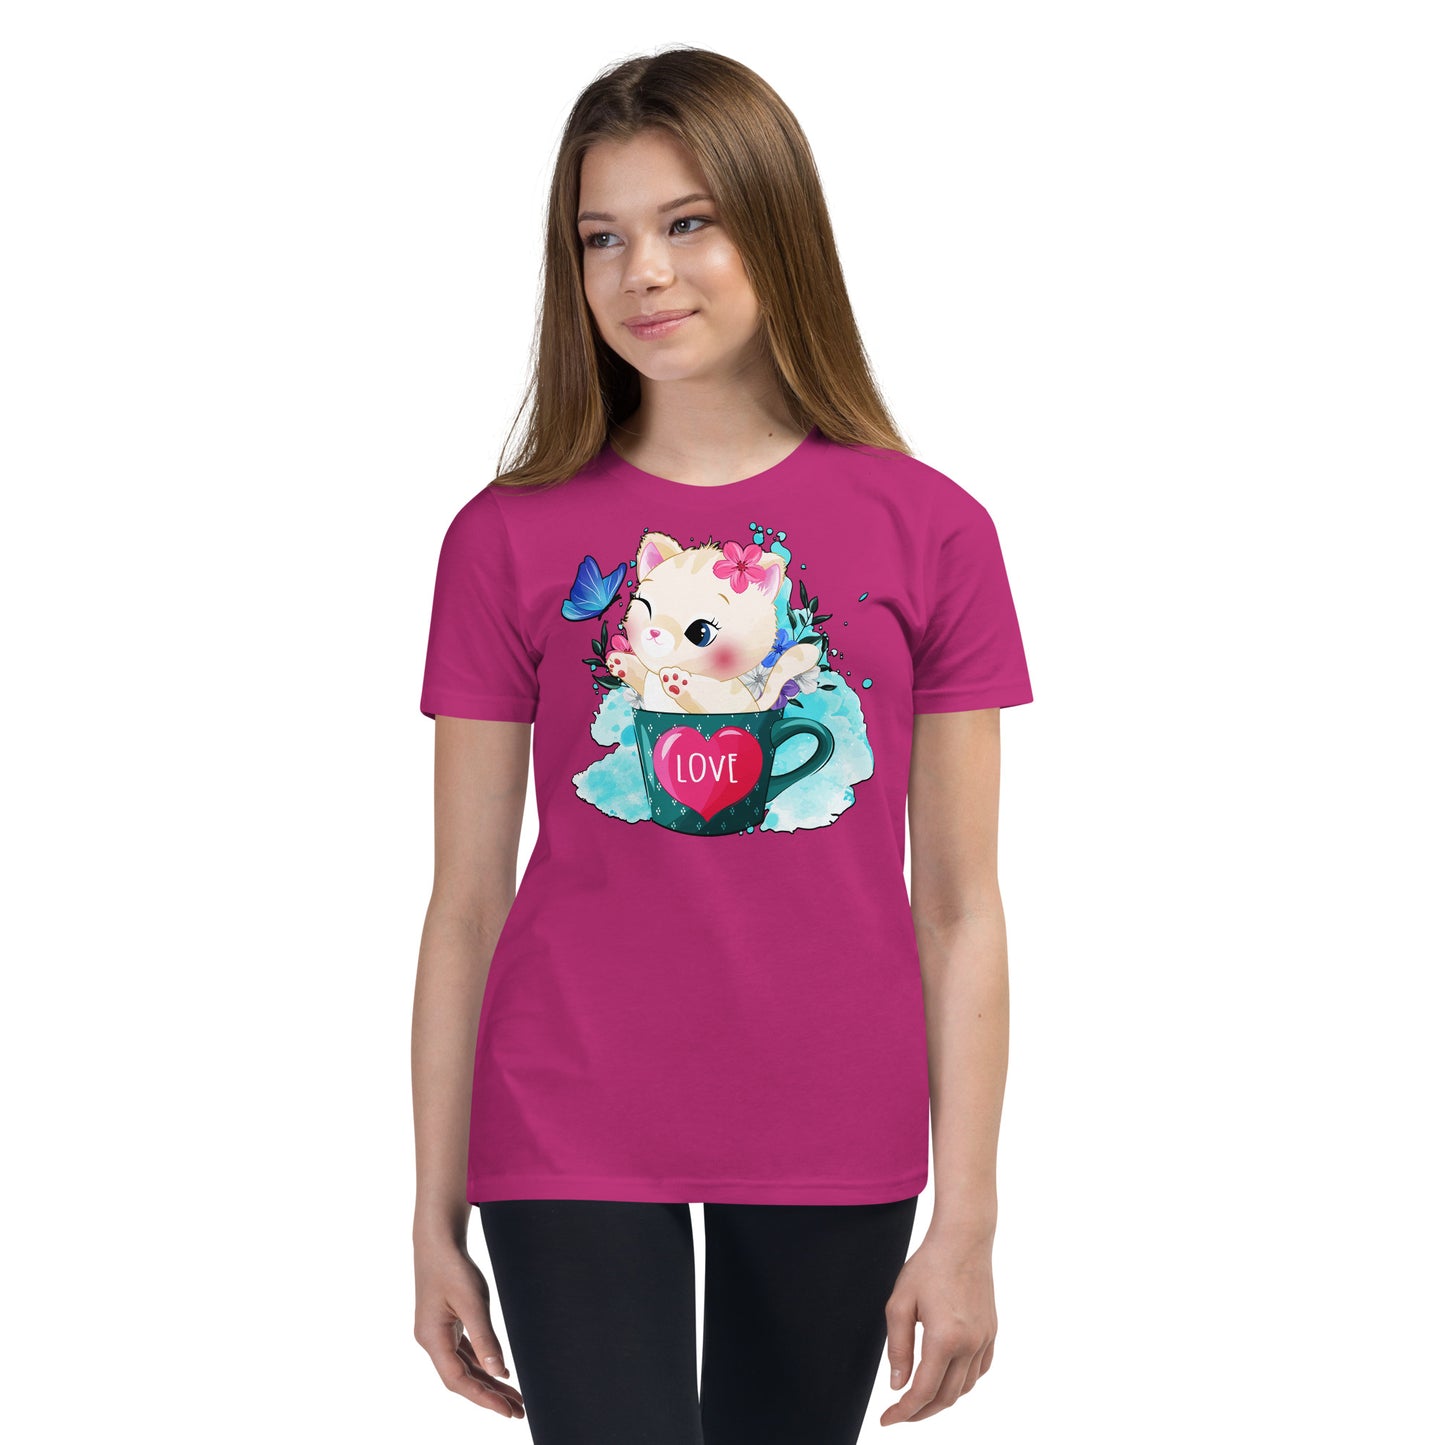 Cute Kitty Cat Inside Cup T-shirt, No. 0317